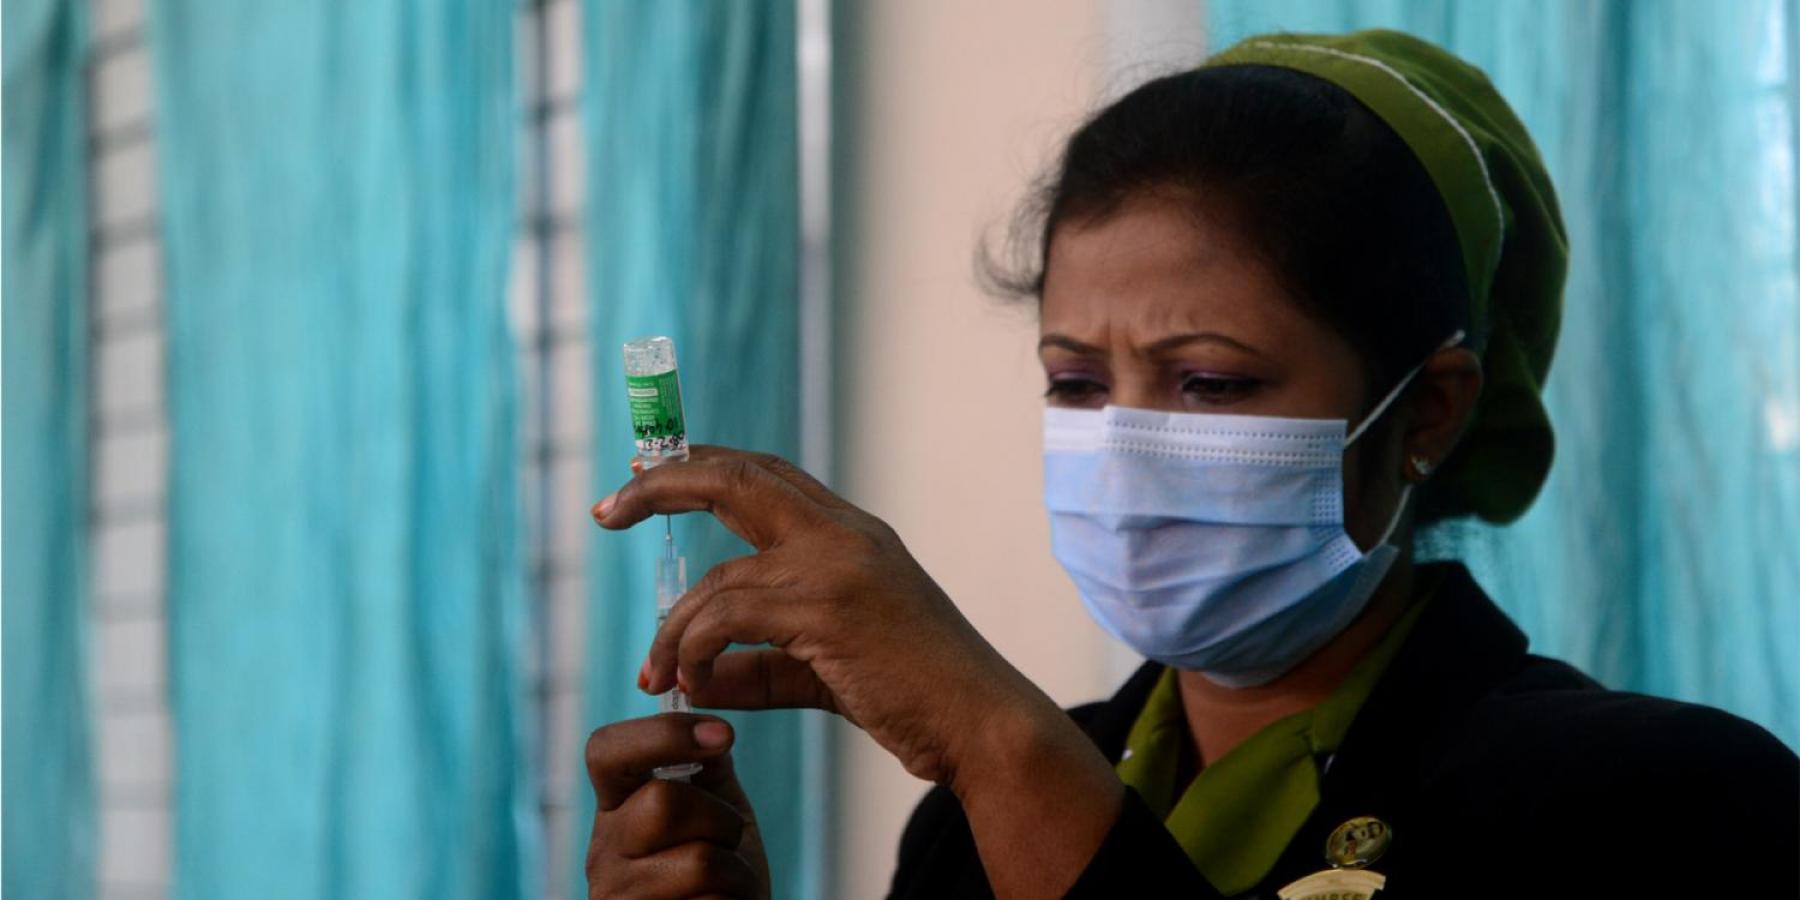 Woman health worker in Bangladesh